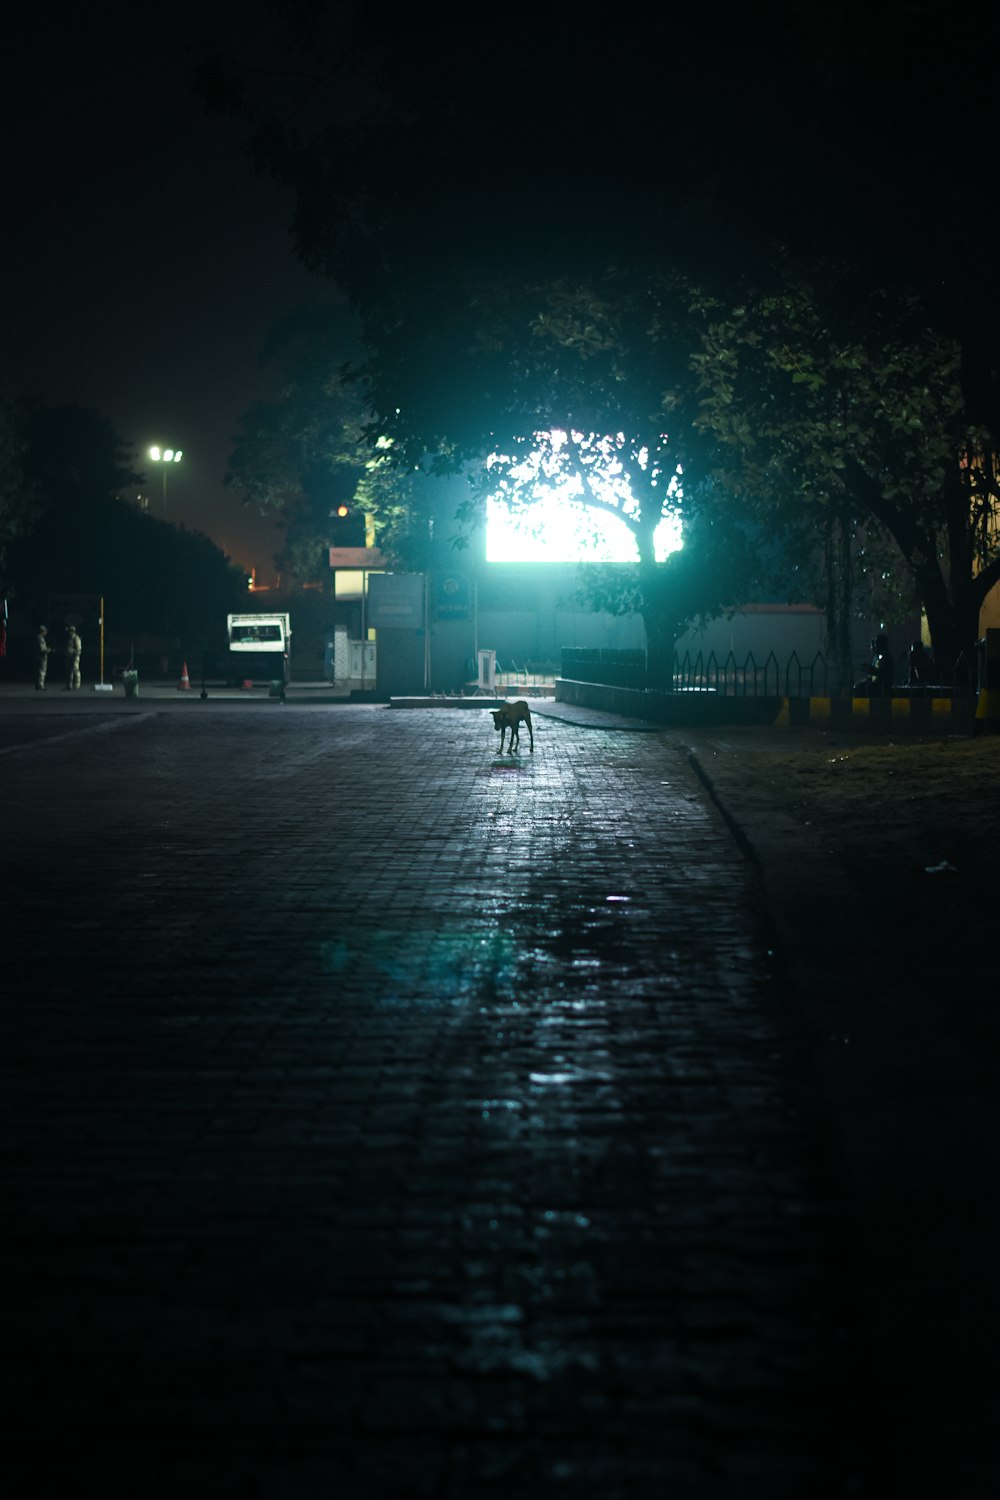 a dog walking down a street at night